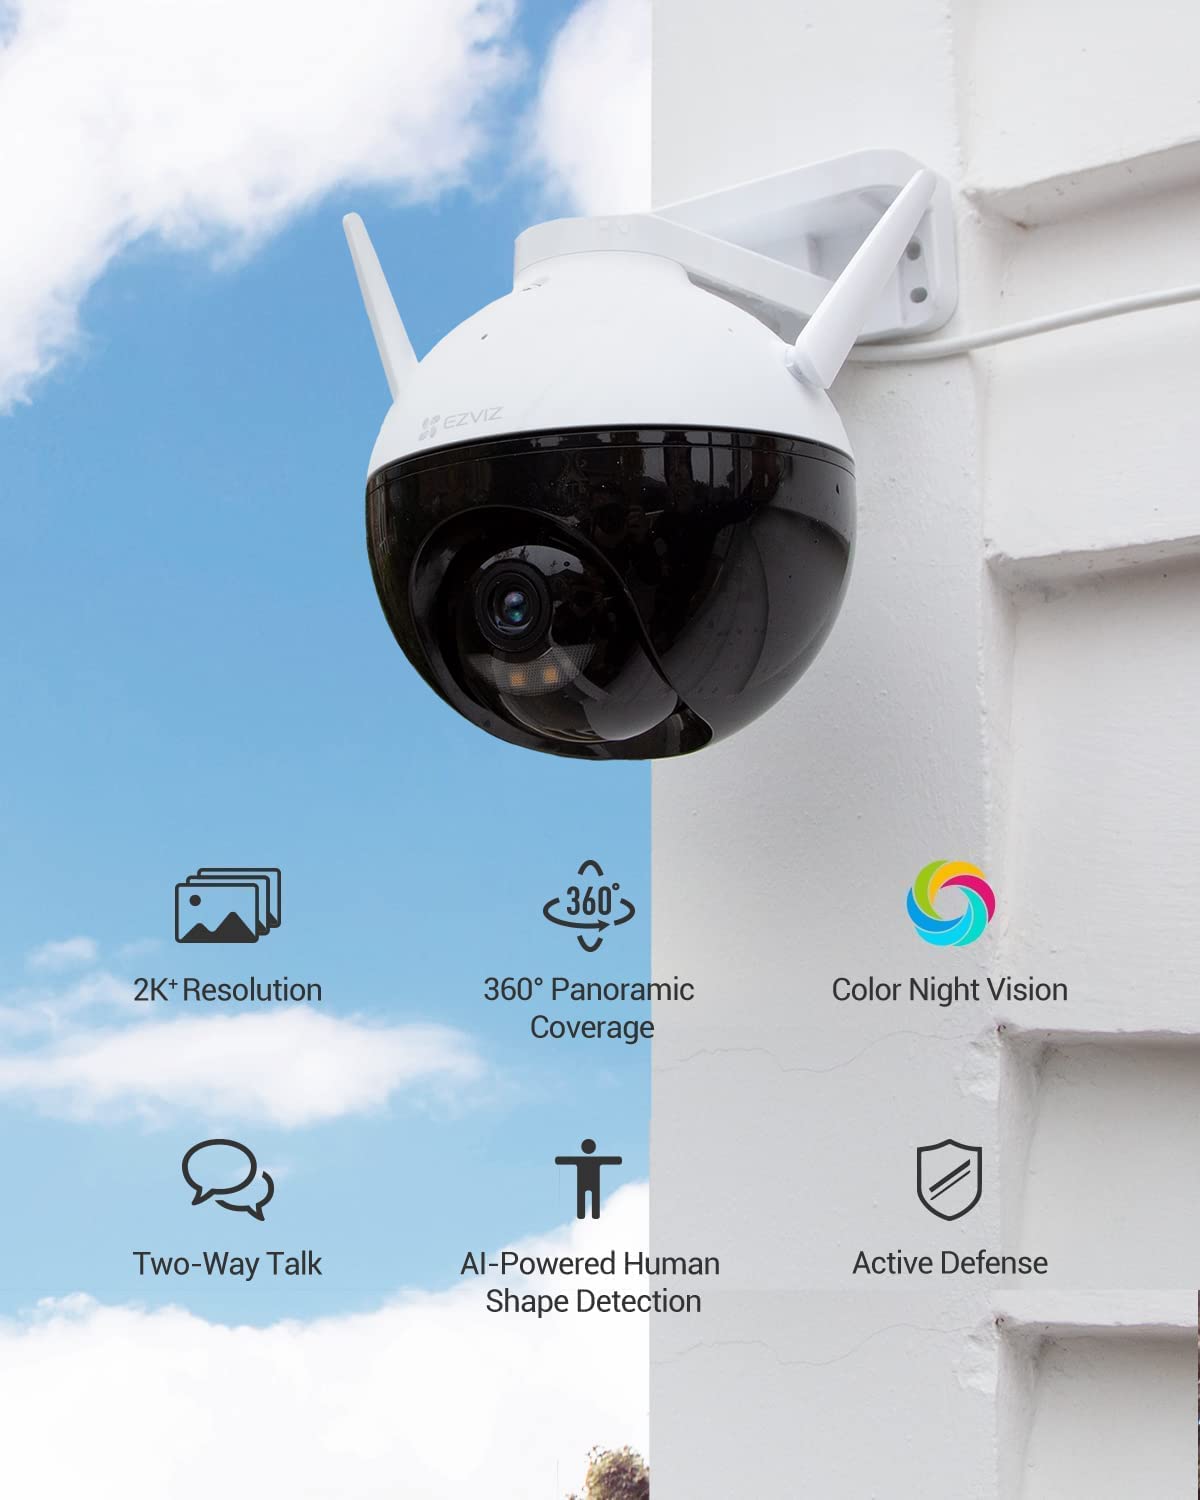 Ezviz C8W Pro 2K WiFi Pan/Tilt IP Security Camera Review 